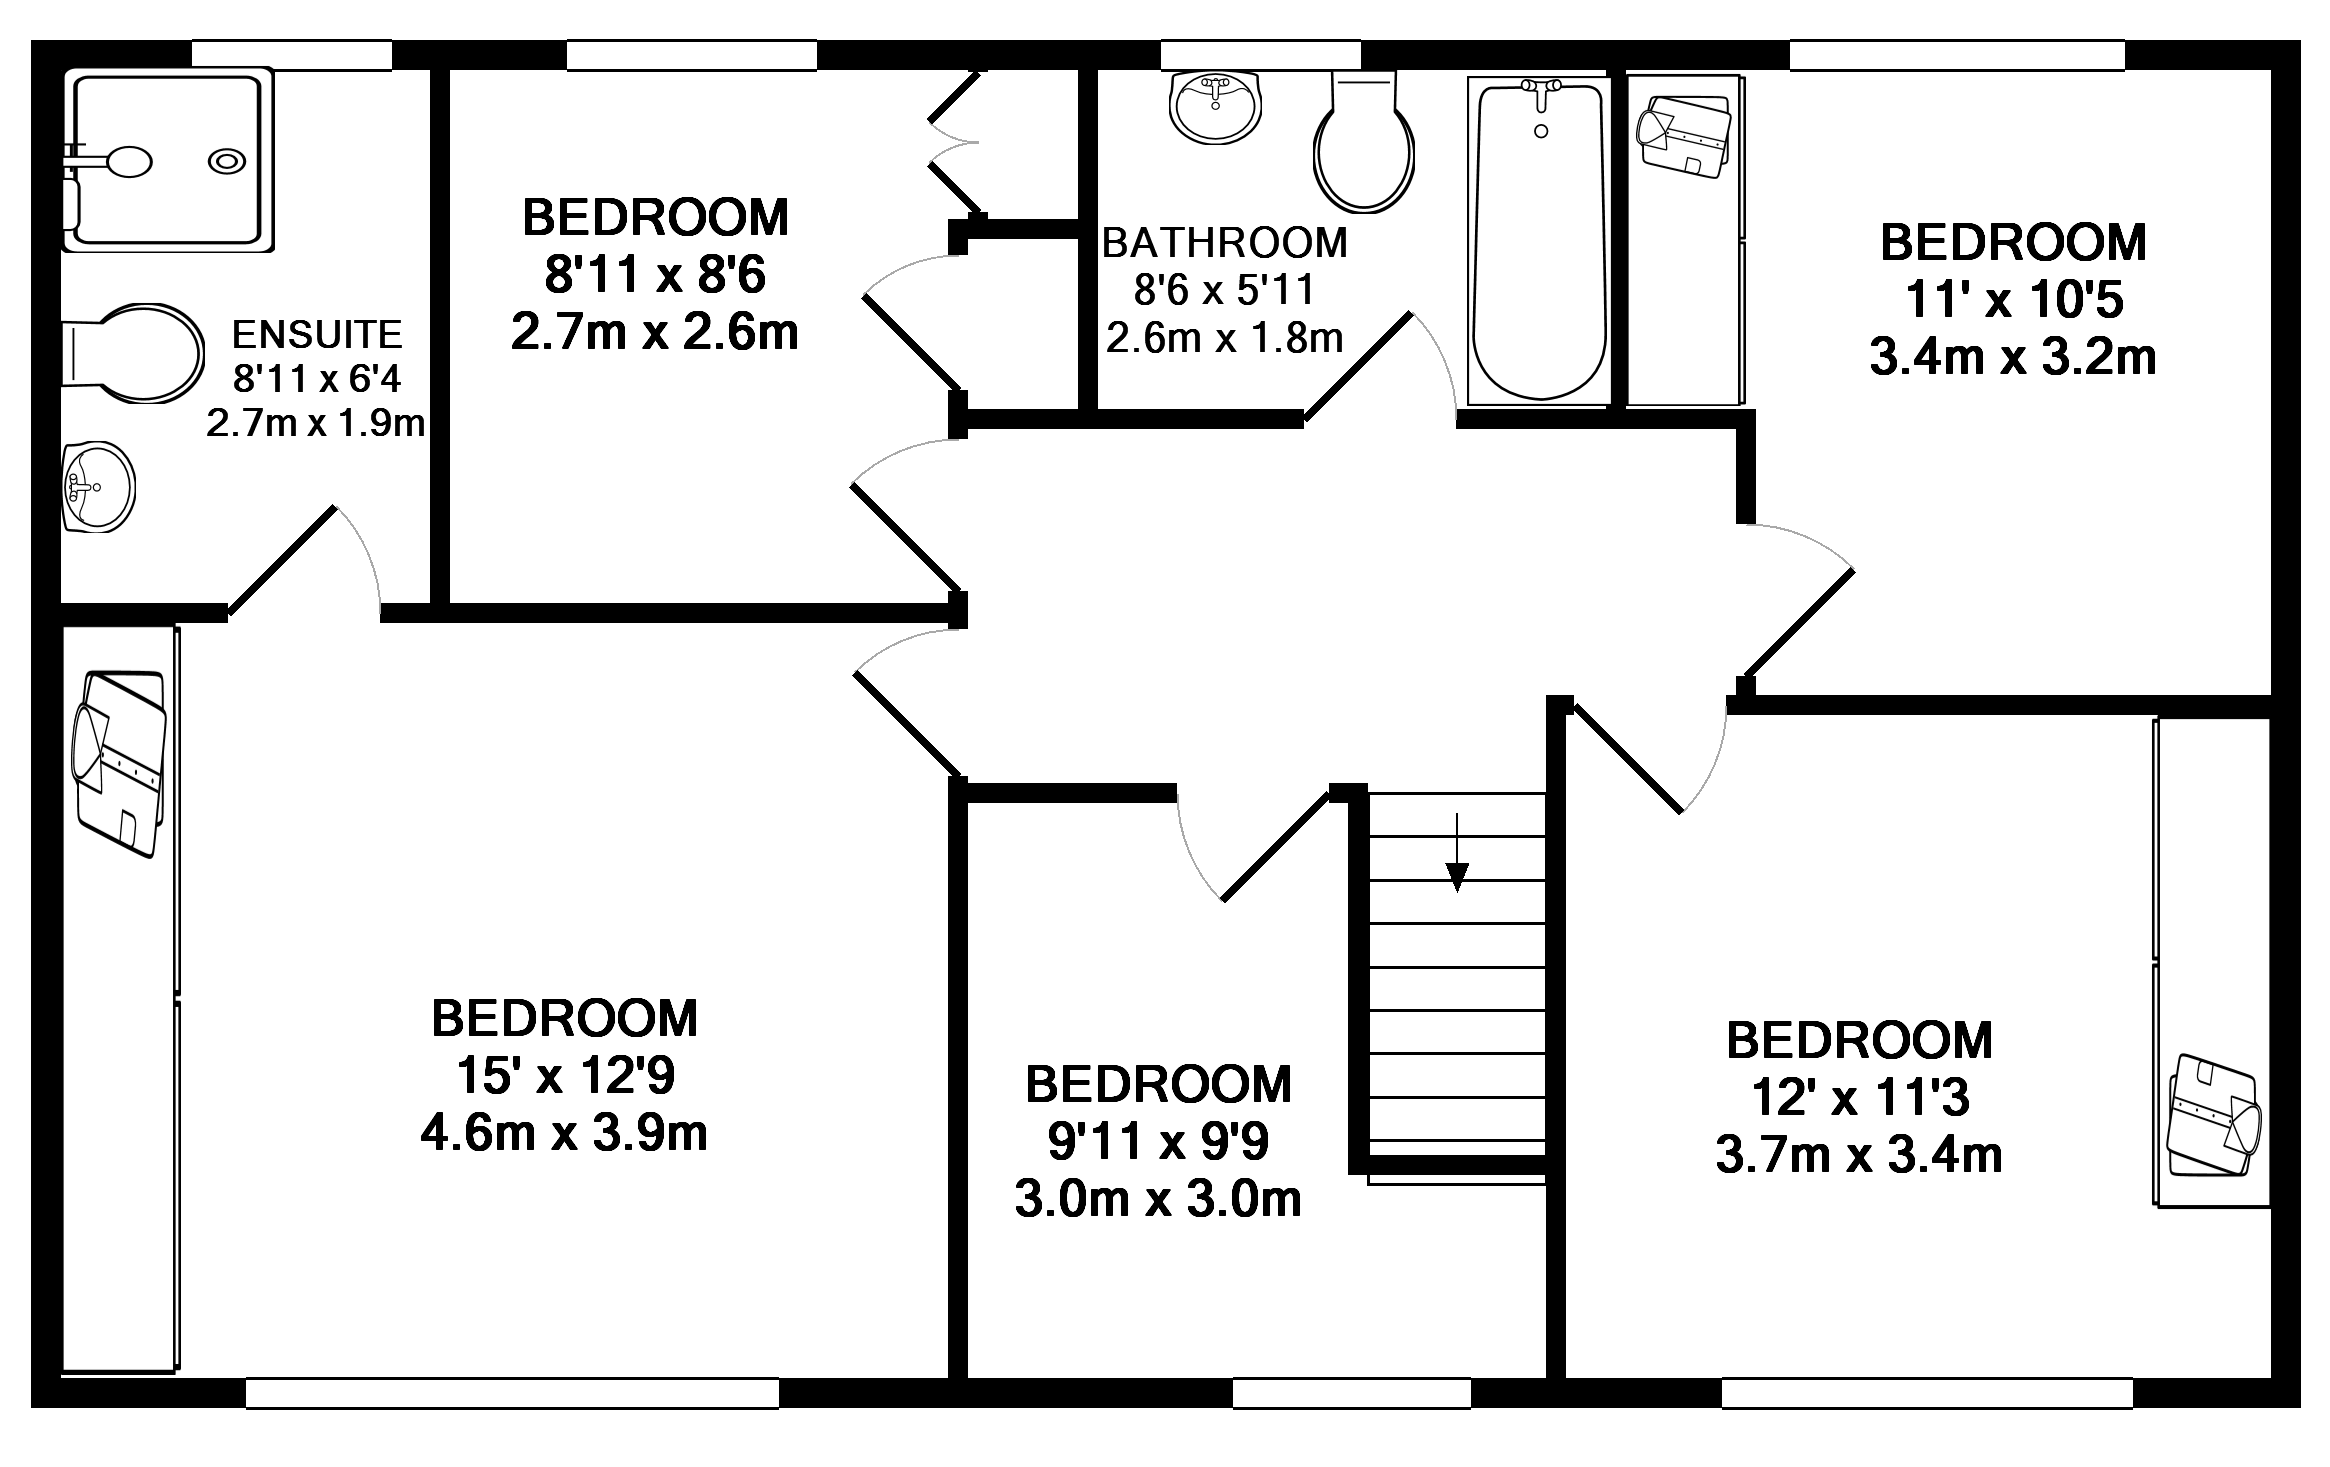 Supersize estate house - host house first floor plan